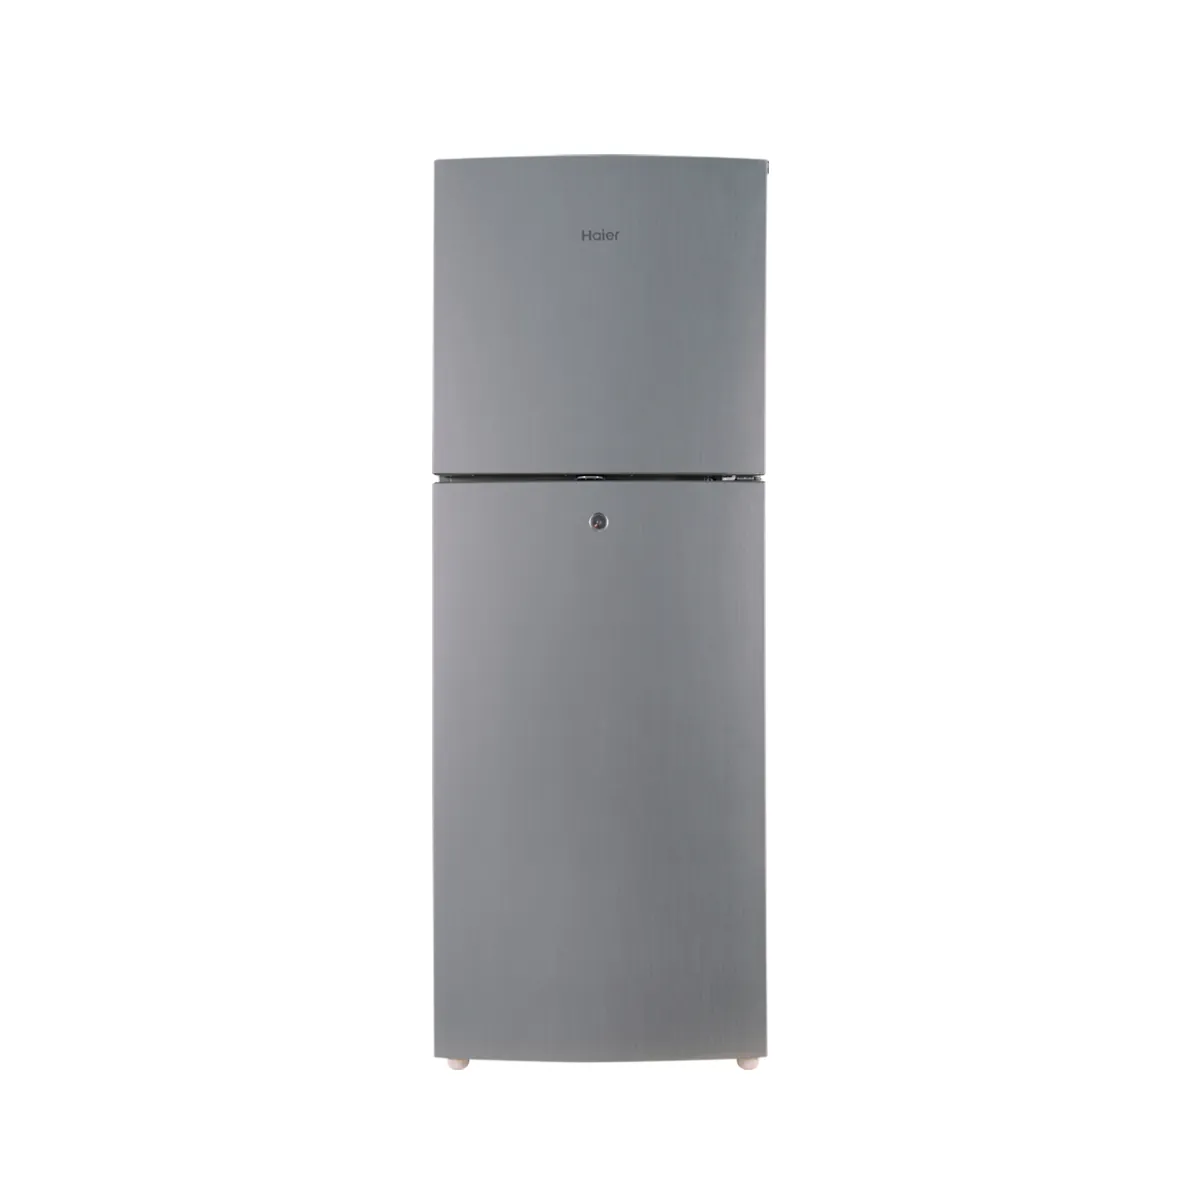 Haier Refrigerator 336 EBS Silver